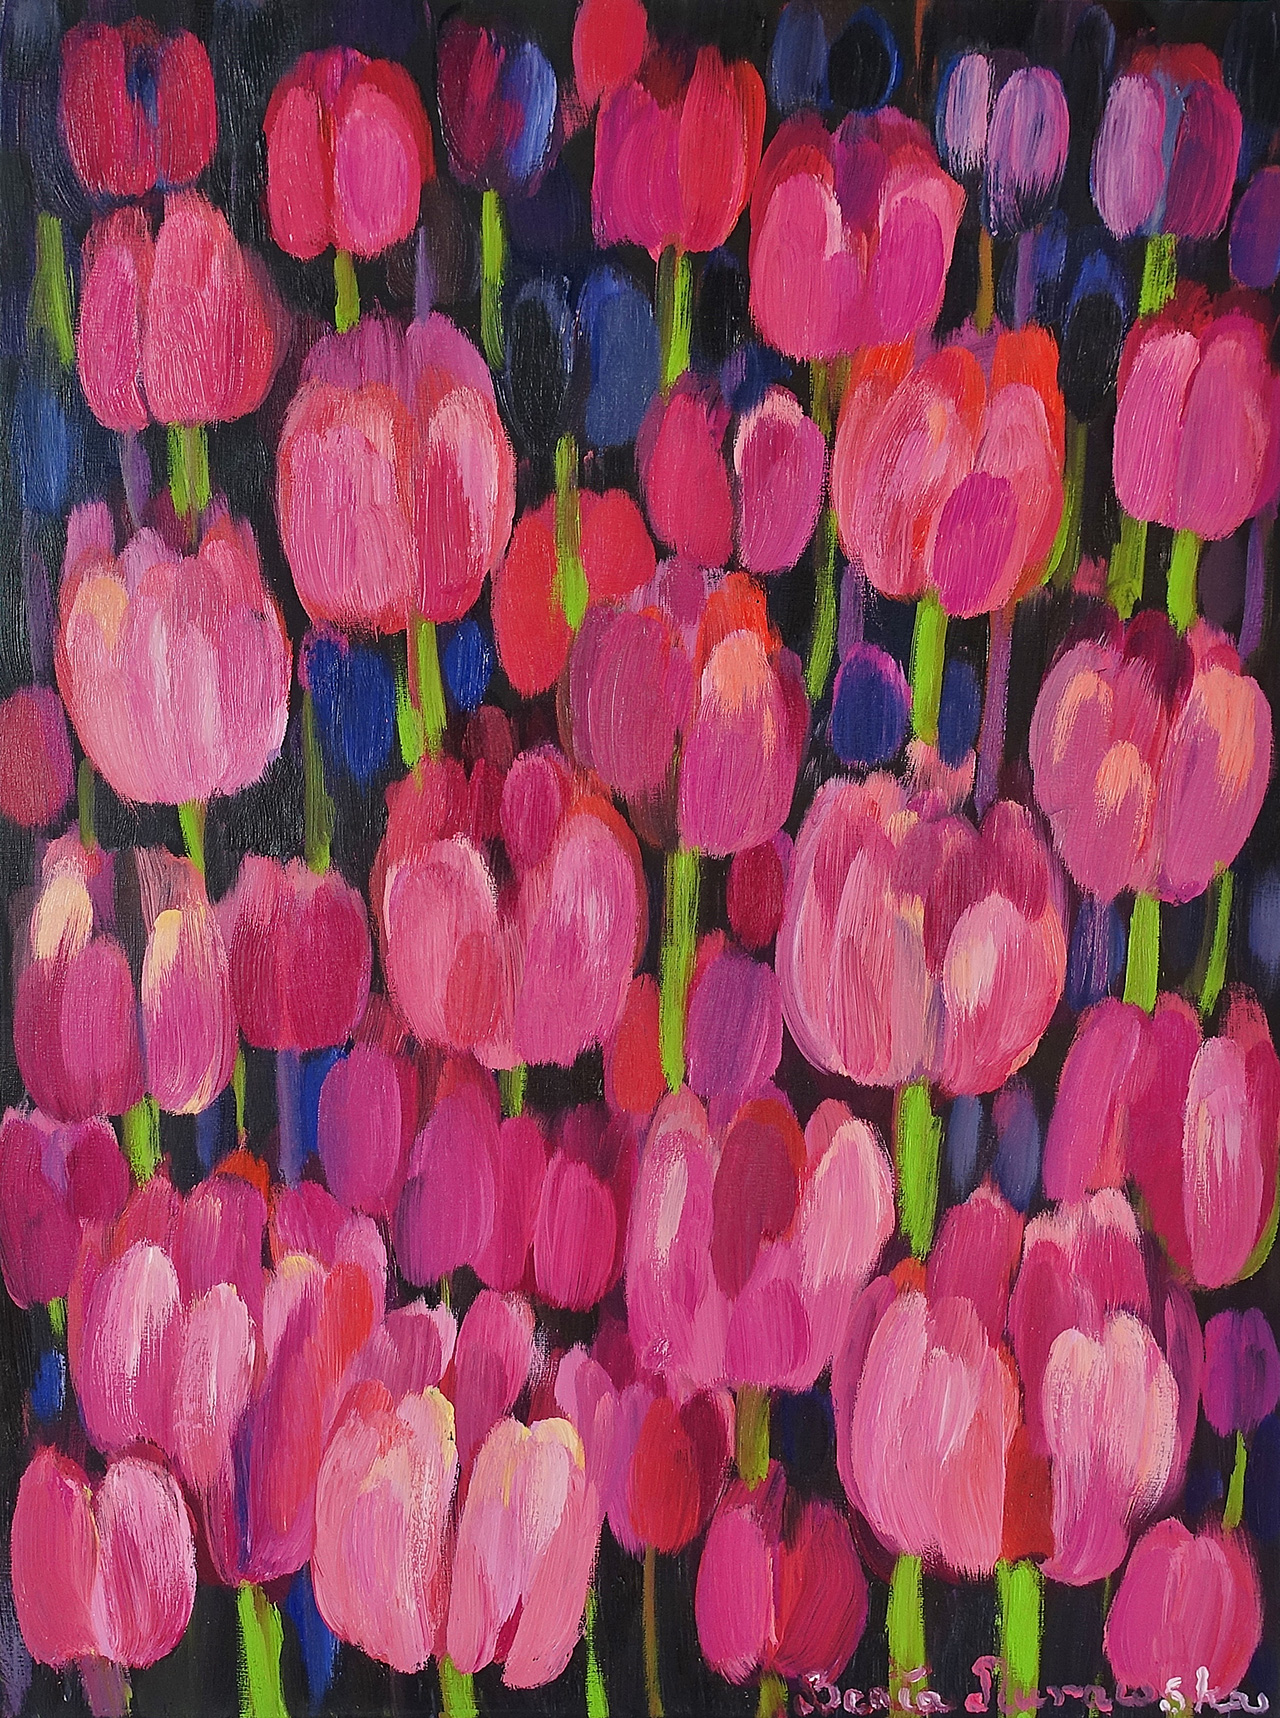 Beata Murawska - Strawberry tulip field (Oil on Canvas | Größe: 66 x 86 cm | Preis: 6500 PLN)